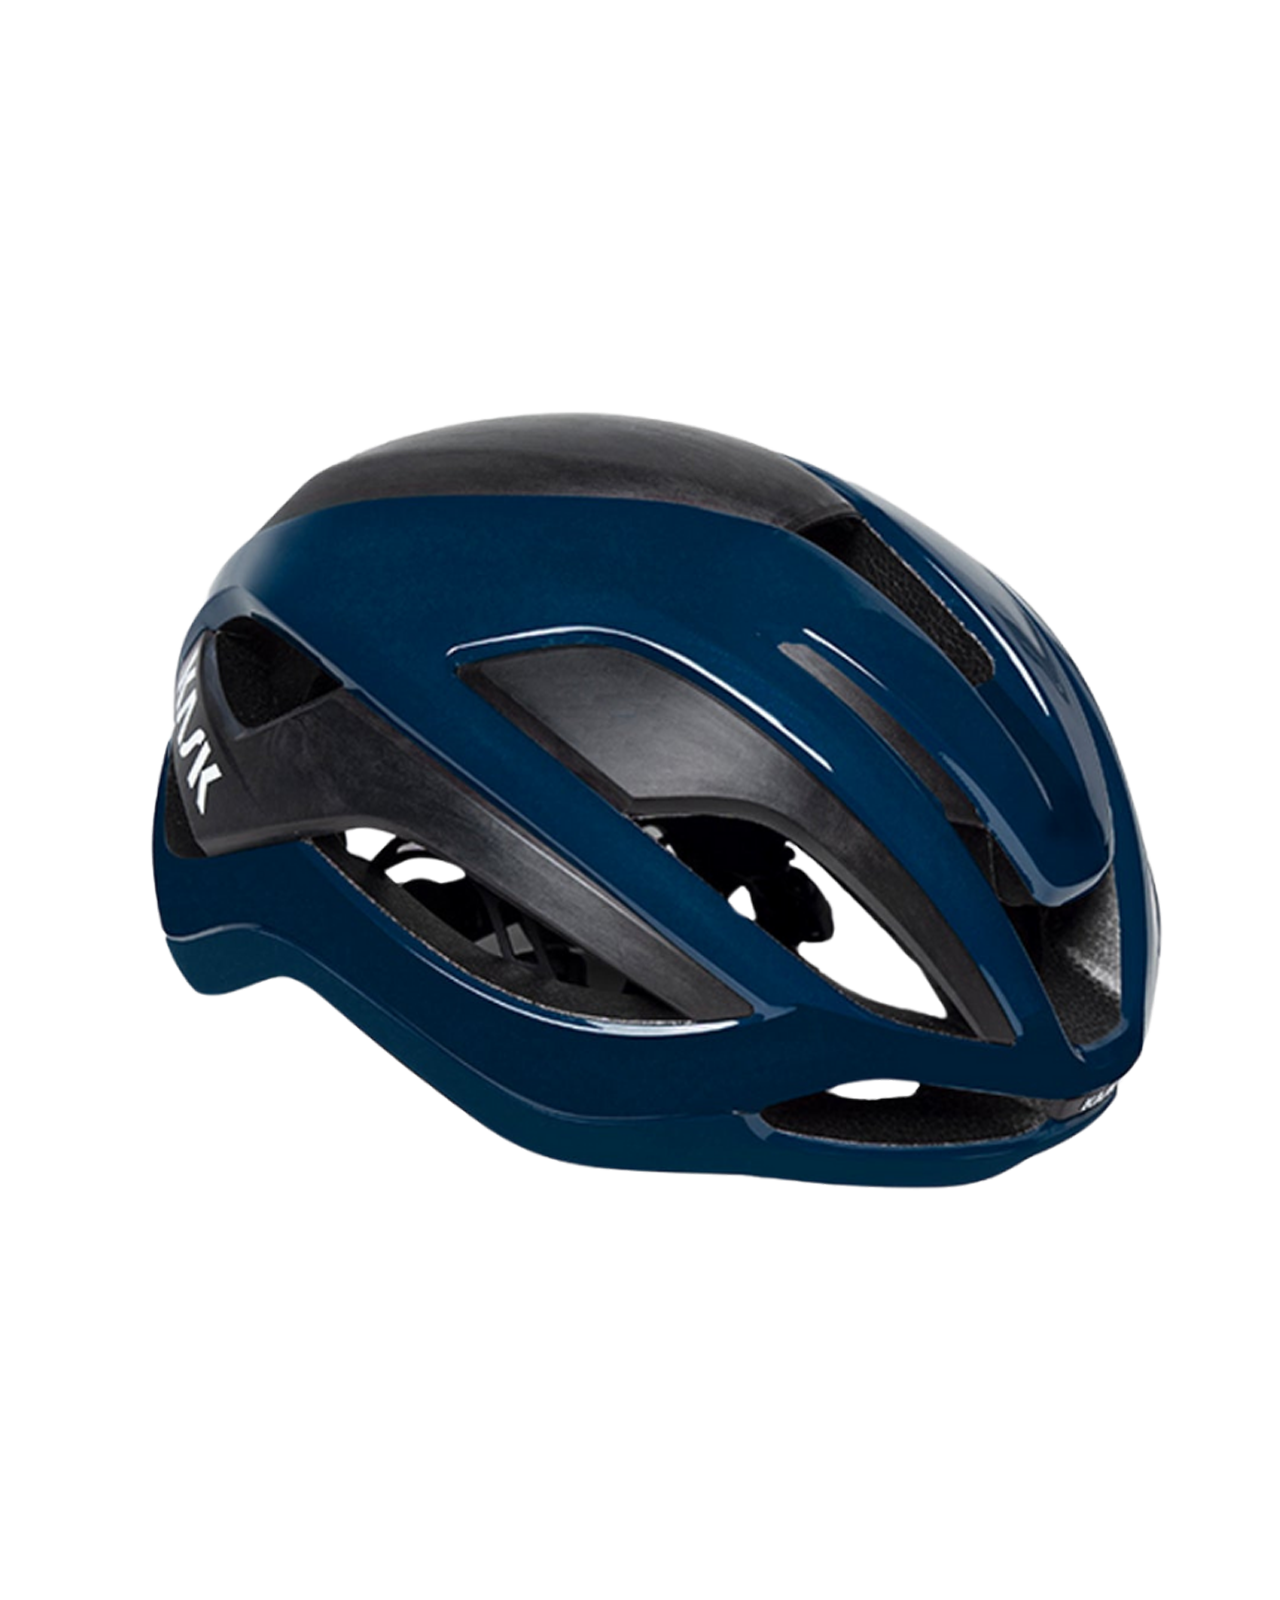 Kask Elemento Helmet - Oxford Blue